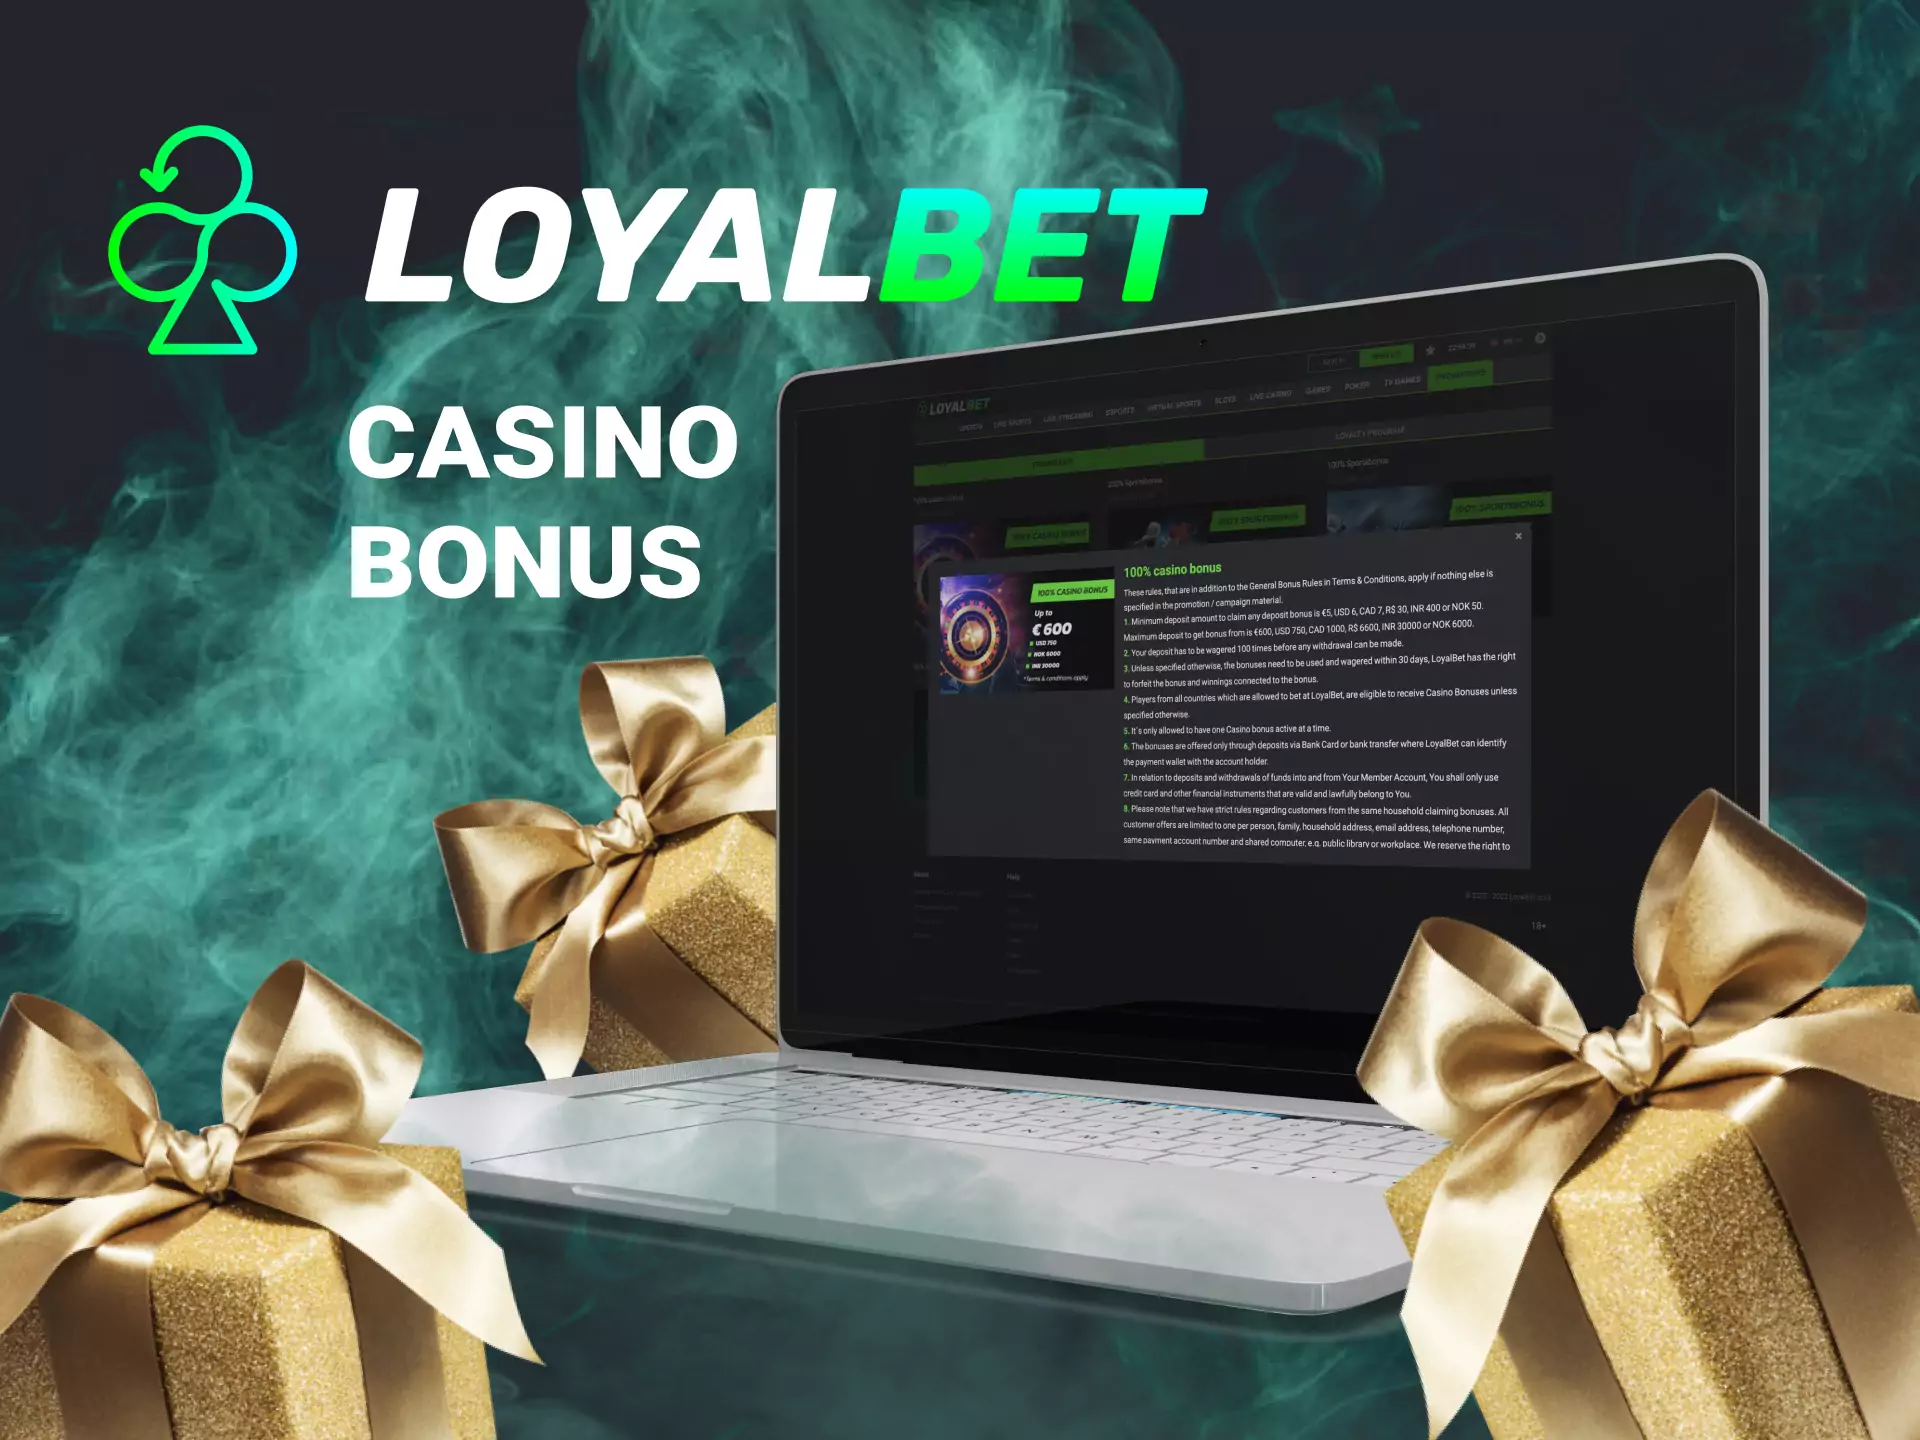 You can get a bonus on casino games on Loyalbet.